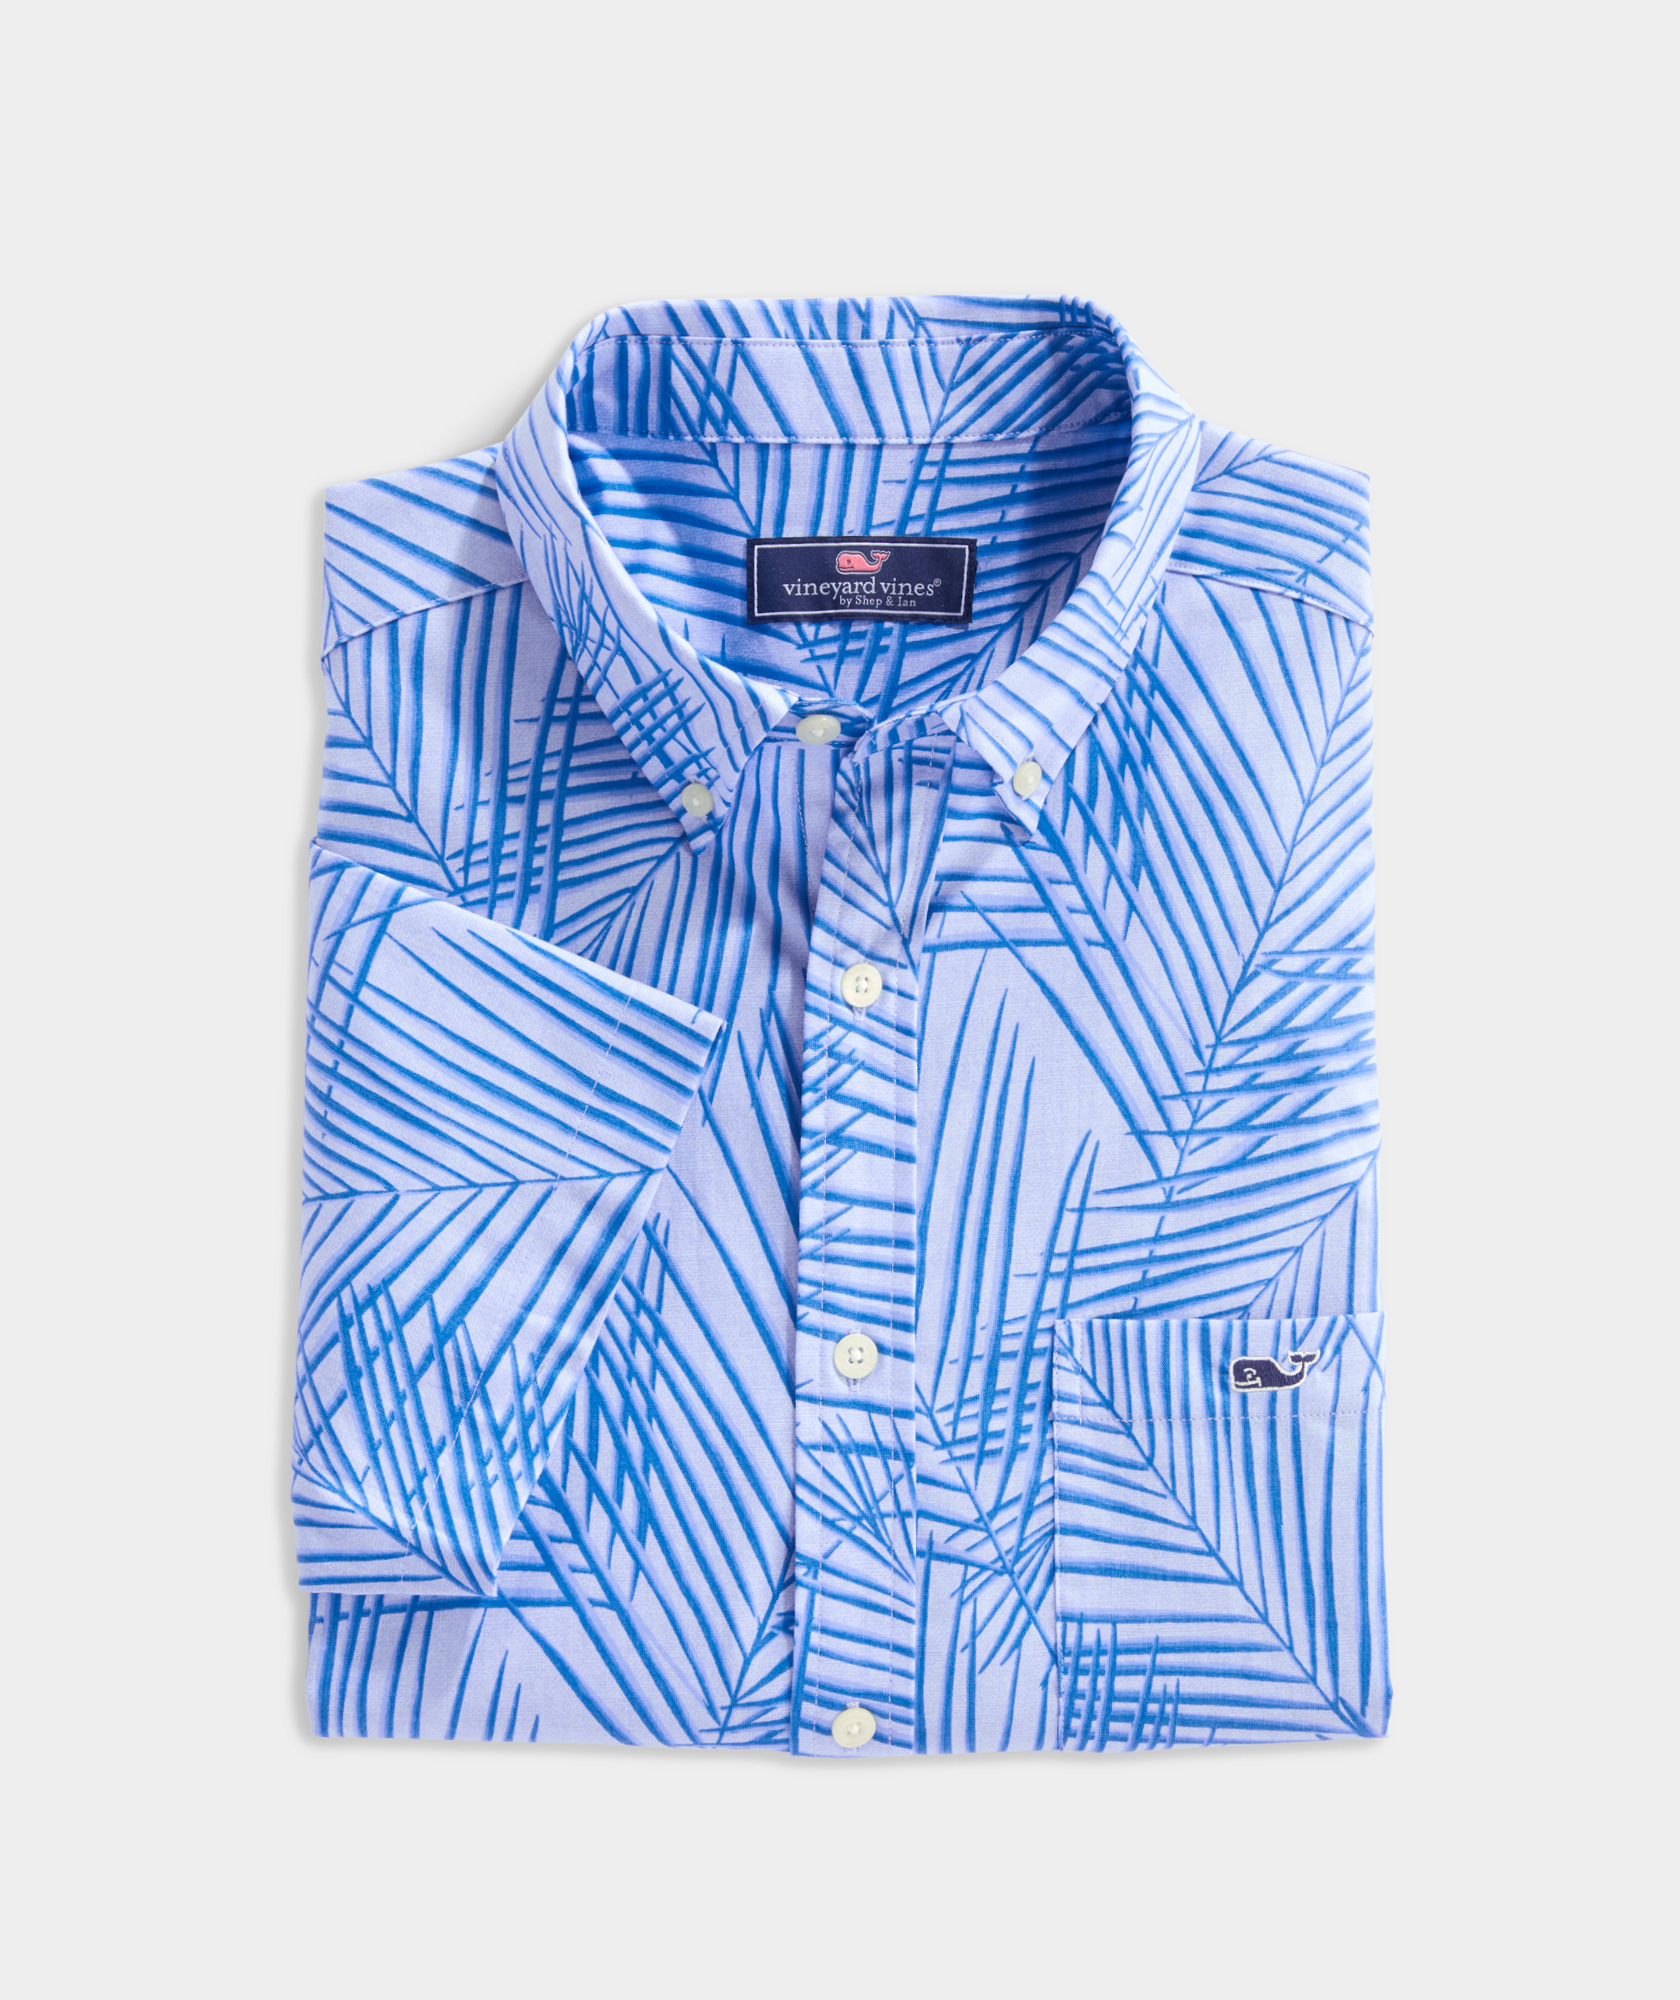 Shop Tropical Palm Stretch Cotton Short-Sleeve Shirt at vineyard vines